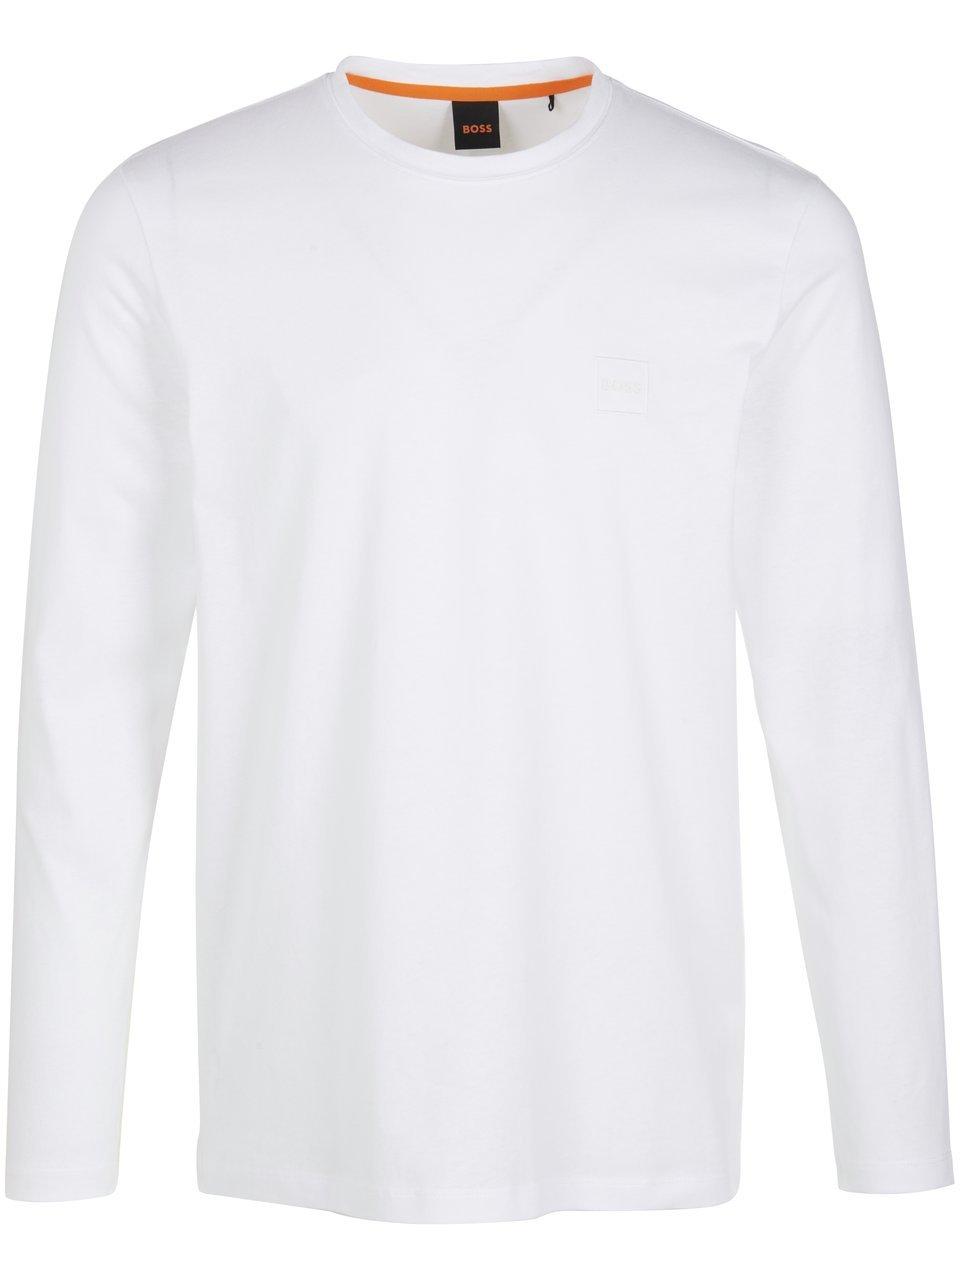 BOSS Tacks T-shirt Heren - White - XL